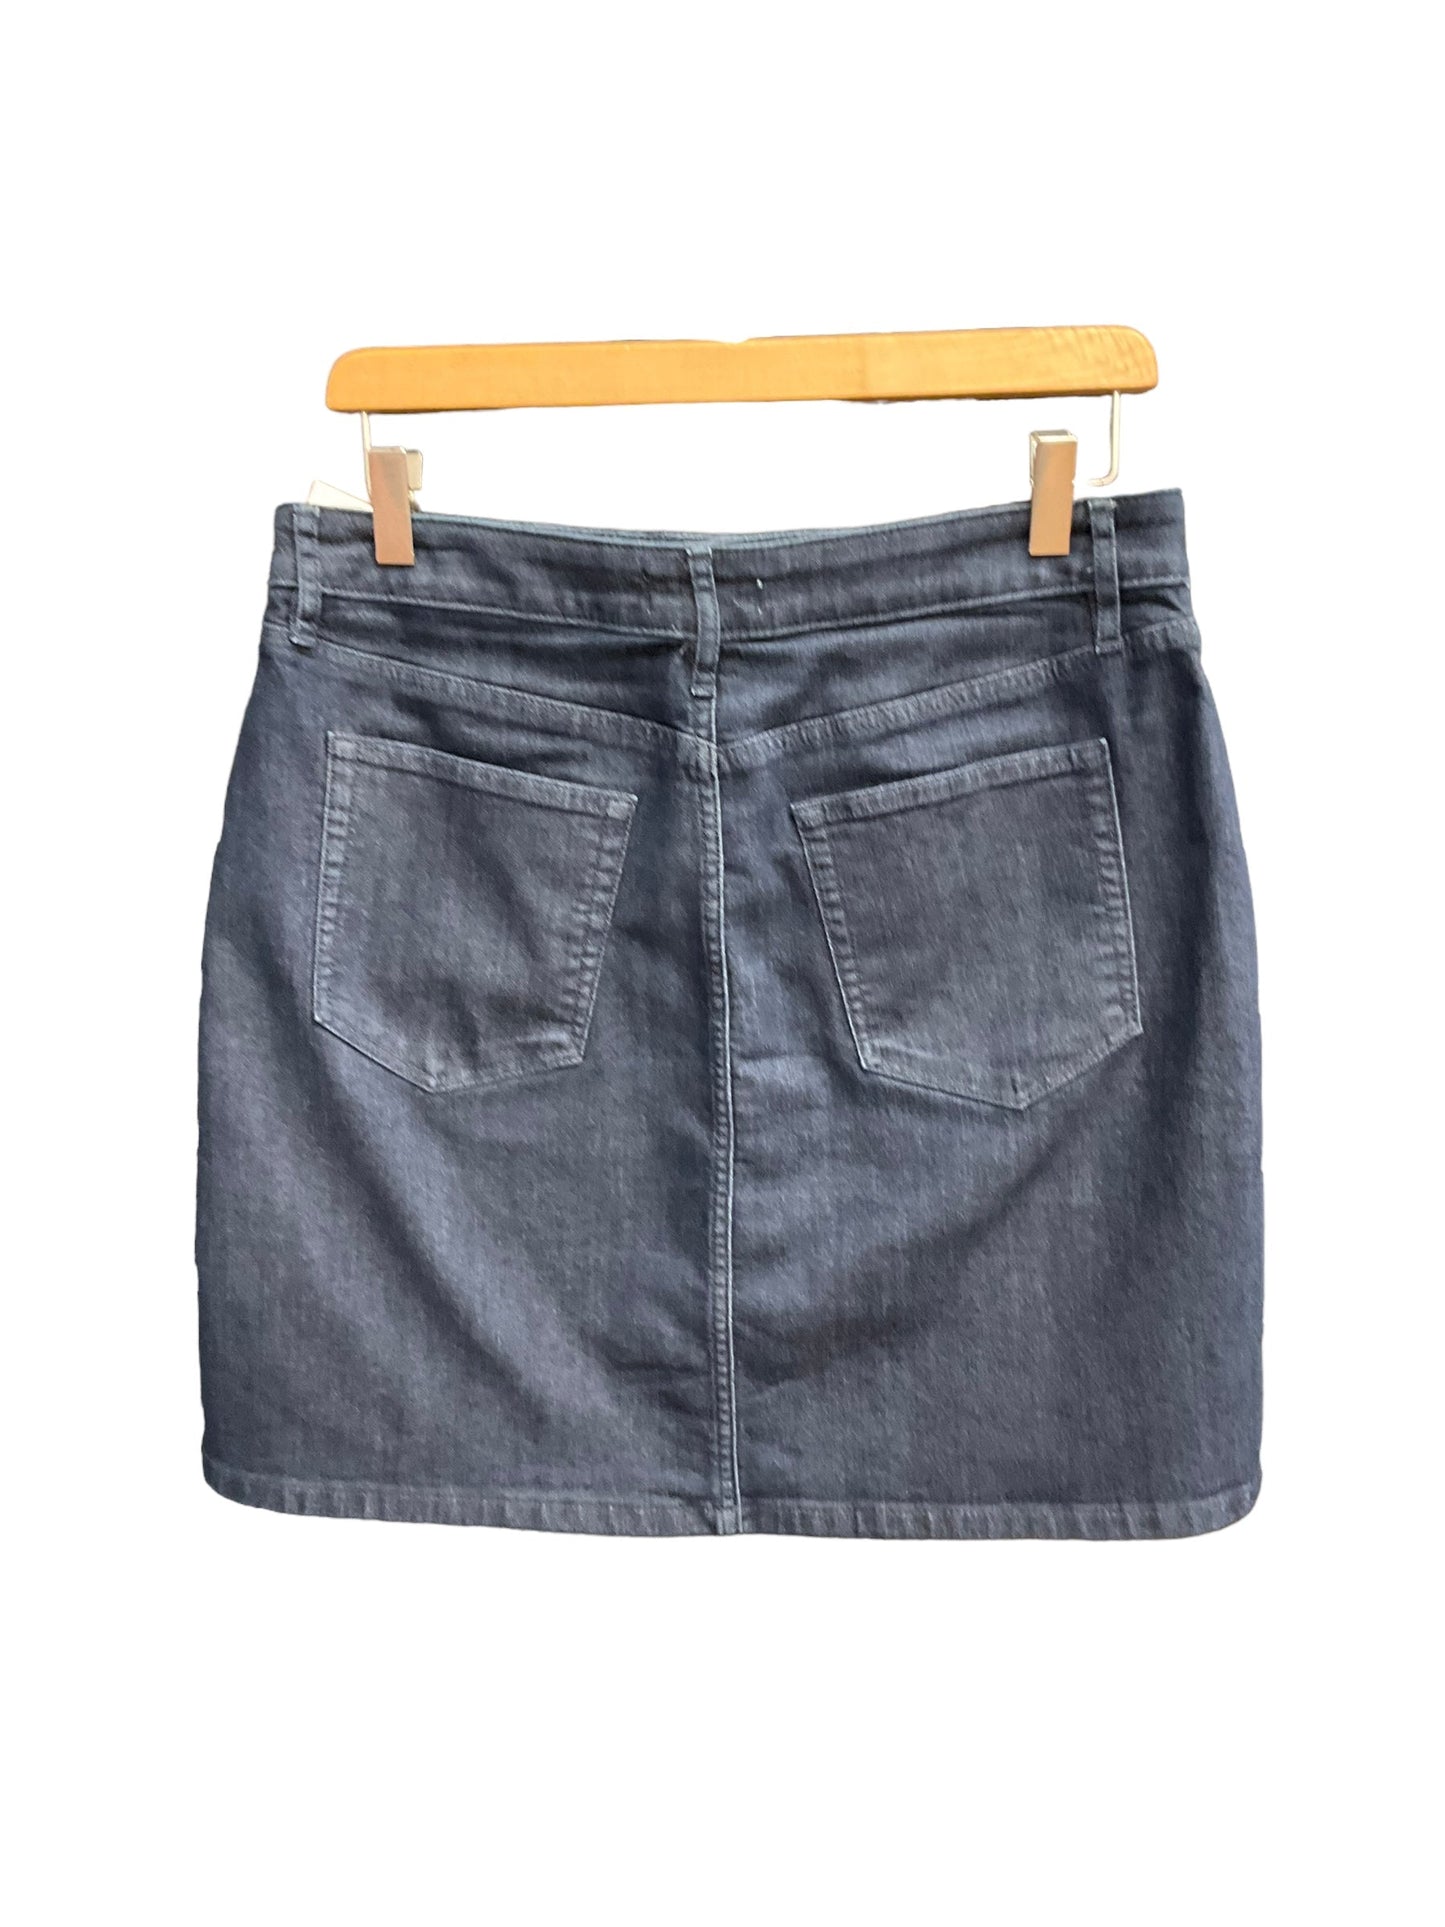 Blue Denim Skirt Mini & Short Loft, Size 8